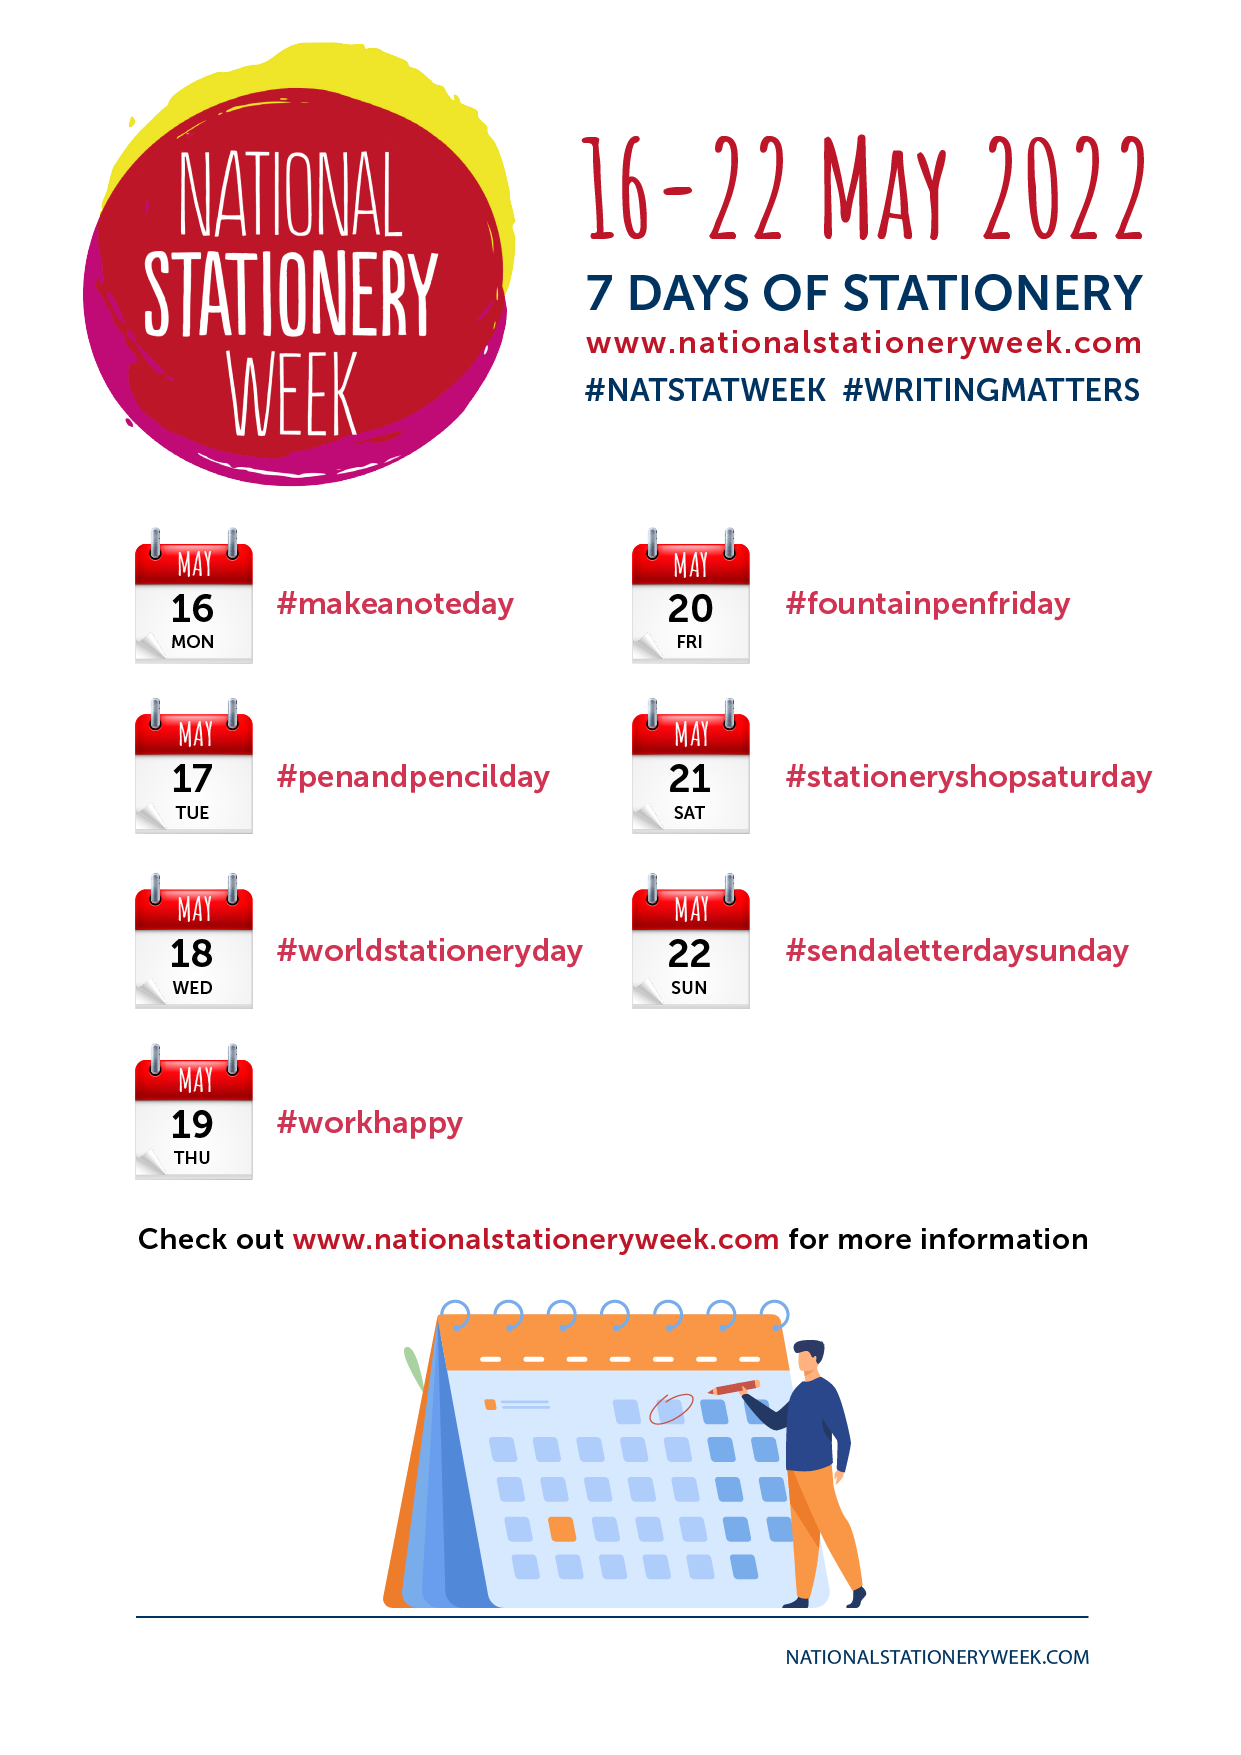 National Stationery Week 2022's 7 Days of Stationery